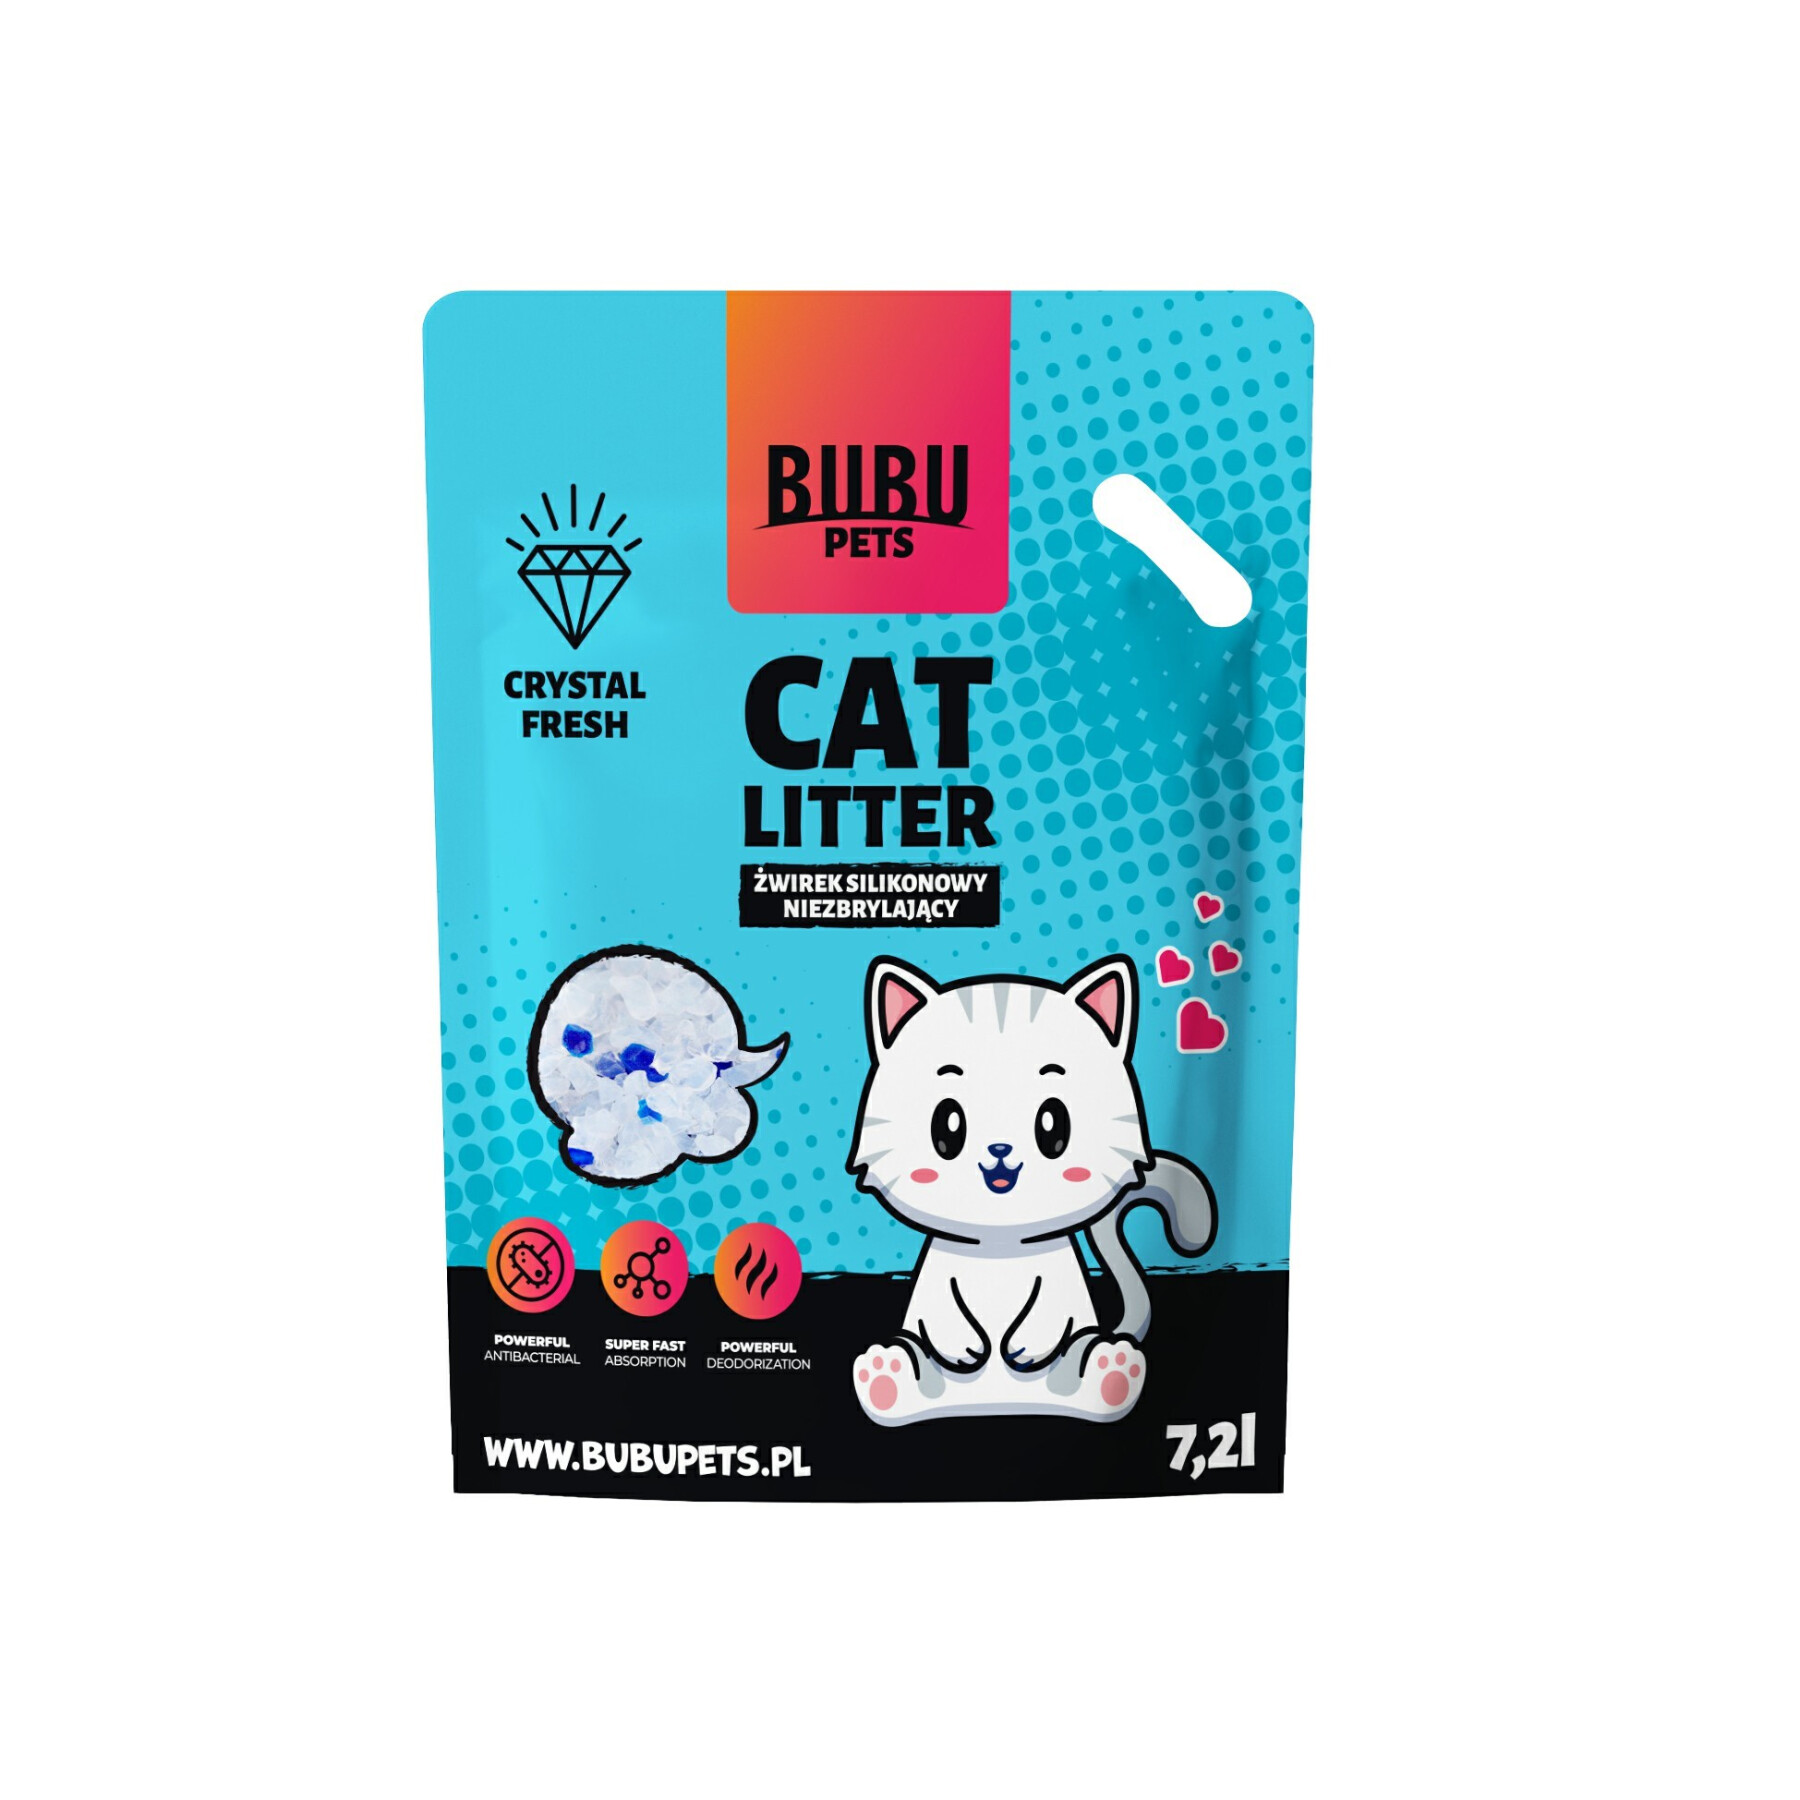 Arena de gel de sílice para gatos BUBU Pets Original